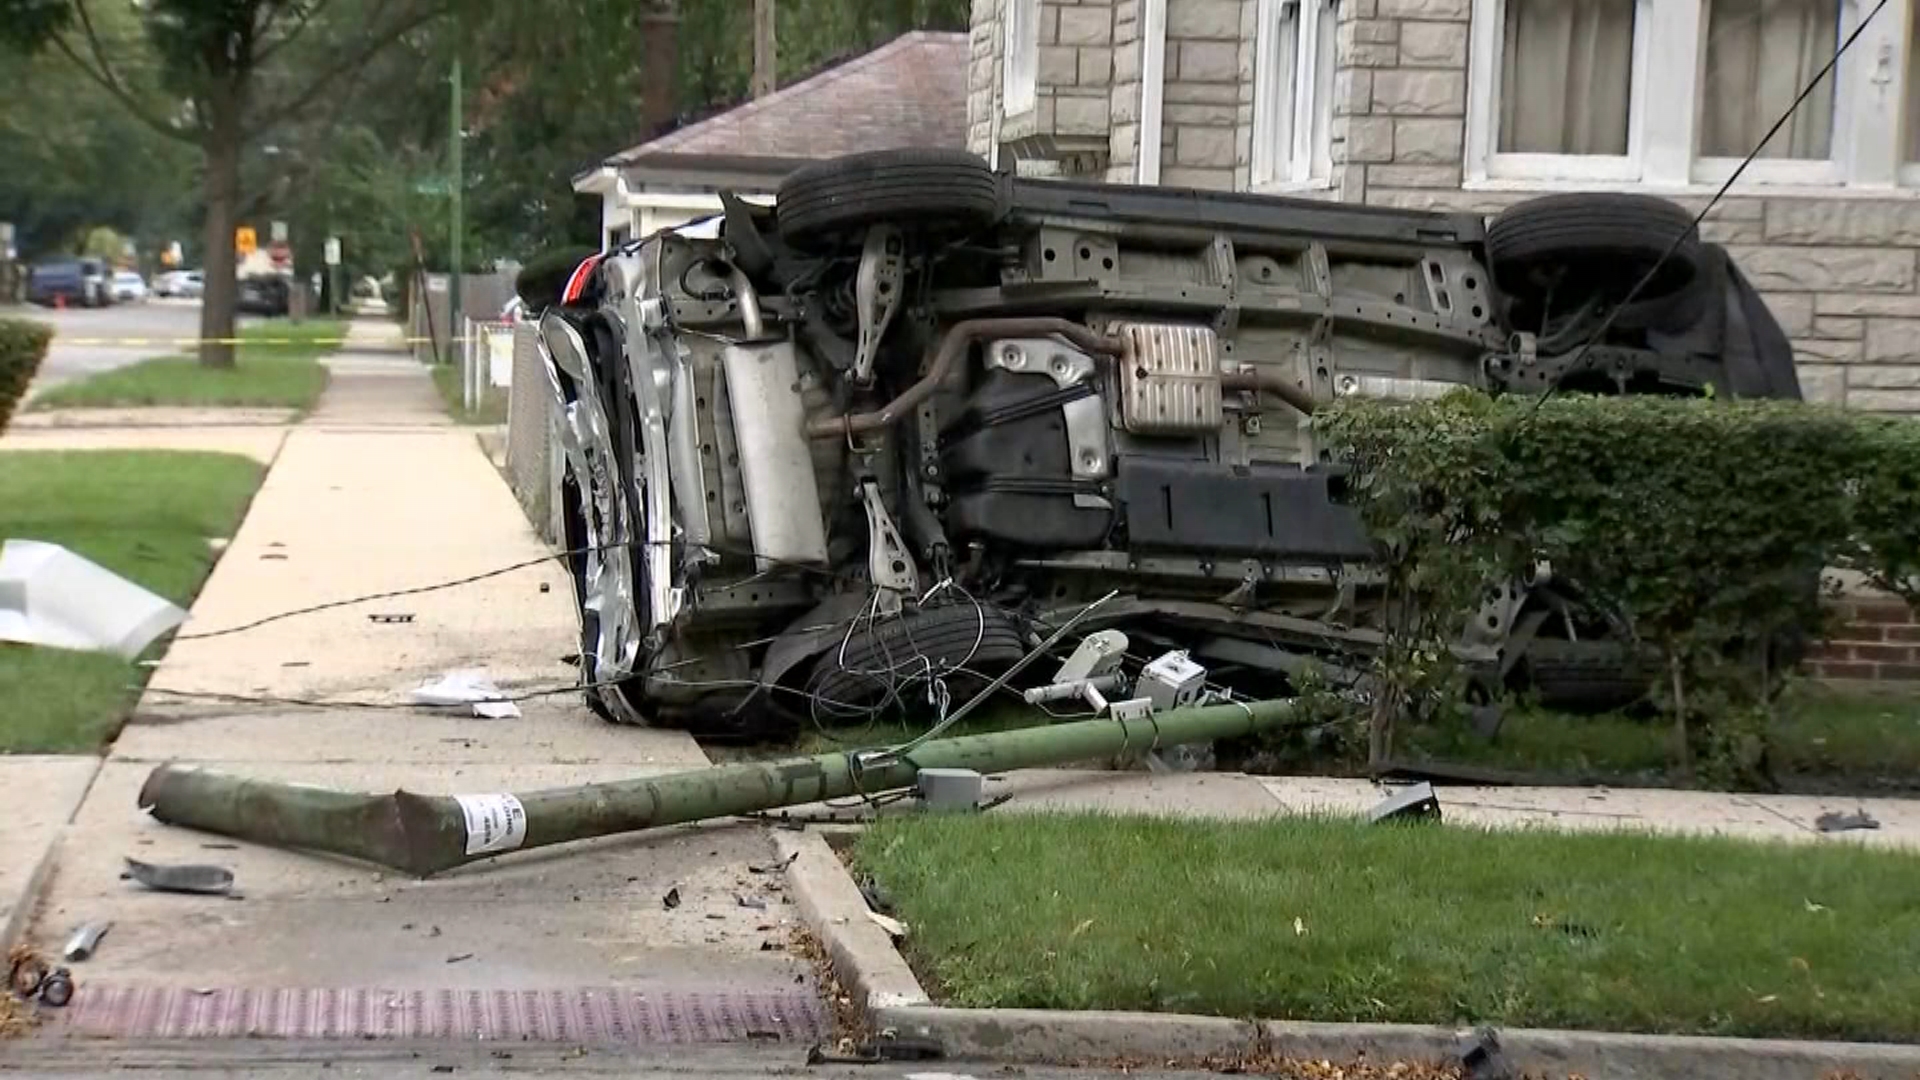 3 Injured in Strike-and-Operate Rollover Crash in Auburn Gresham, Police Say – NBC Chicago